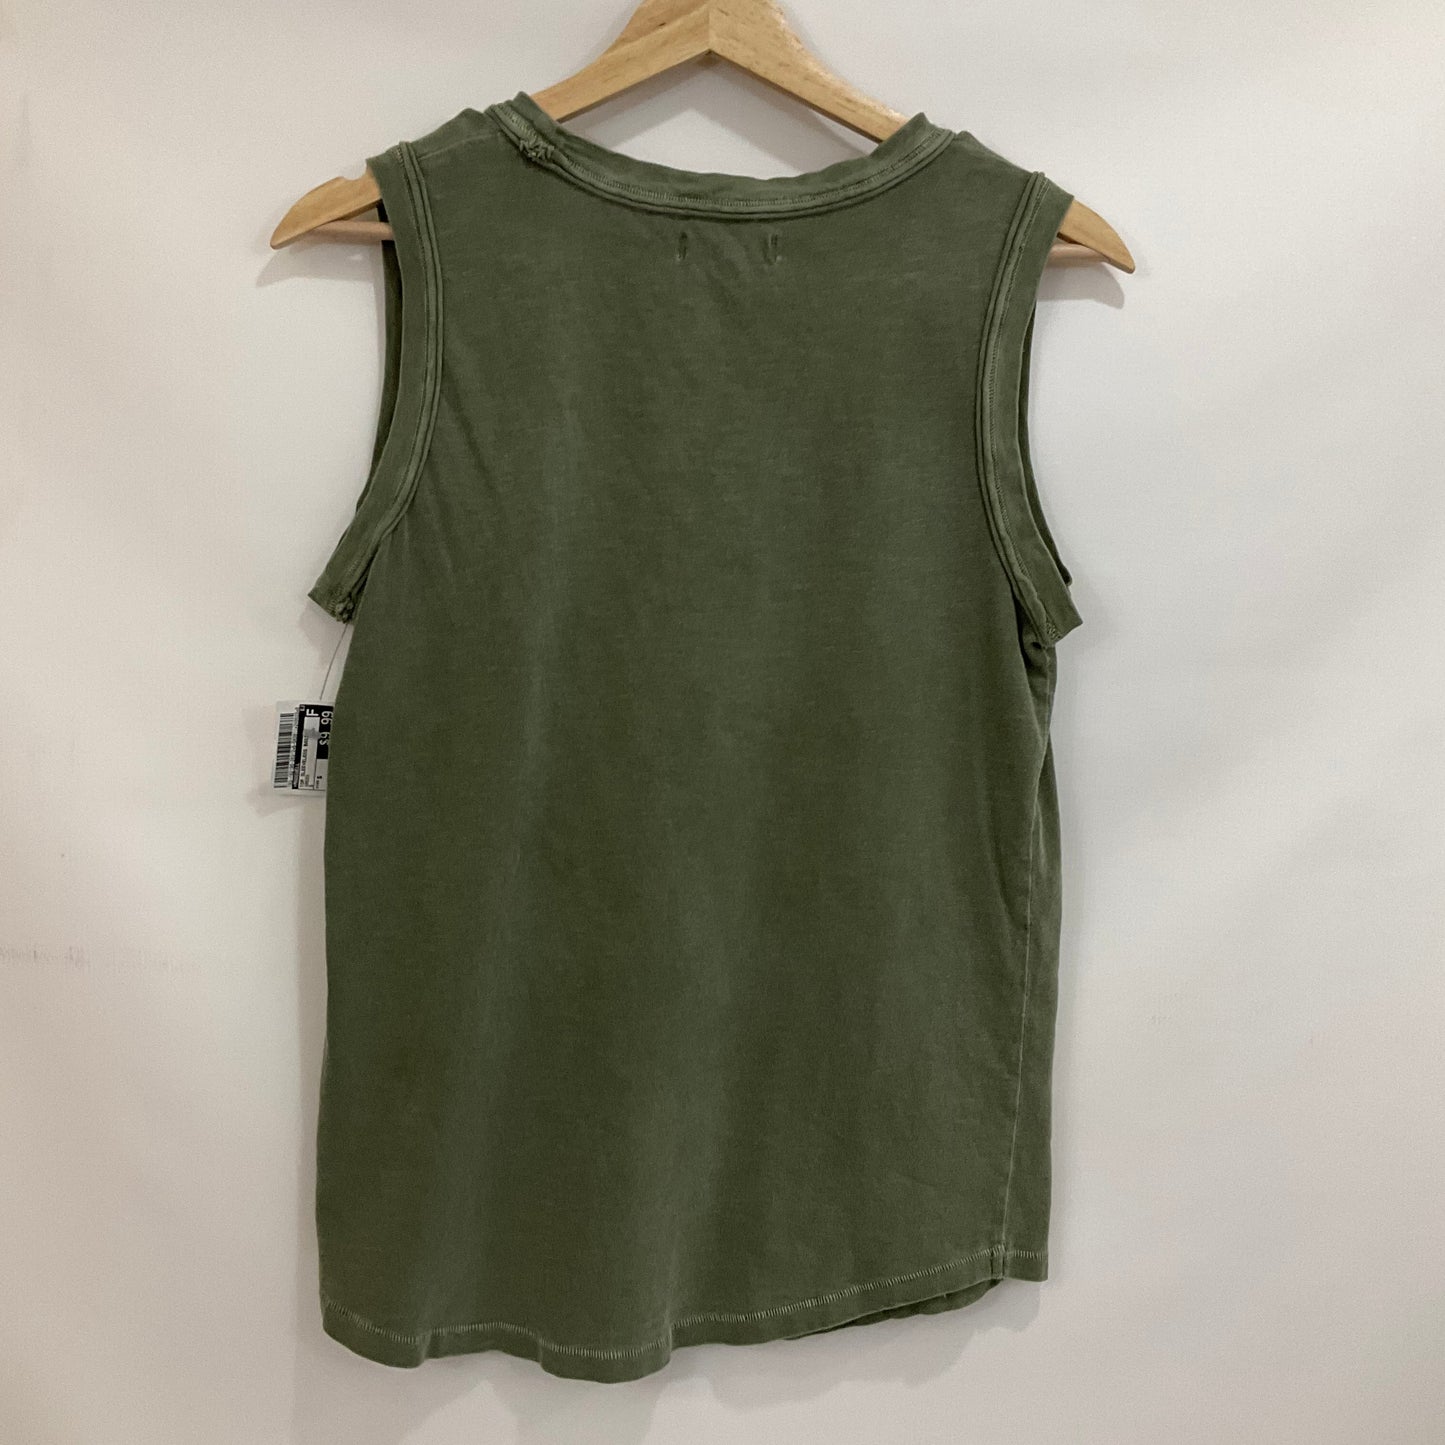 Green Top Sleeveless Basic Madewell, Size S